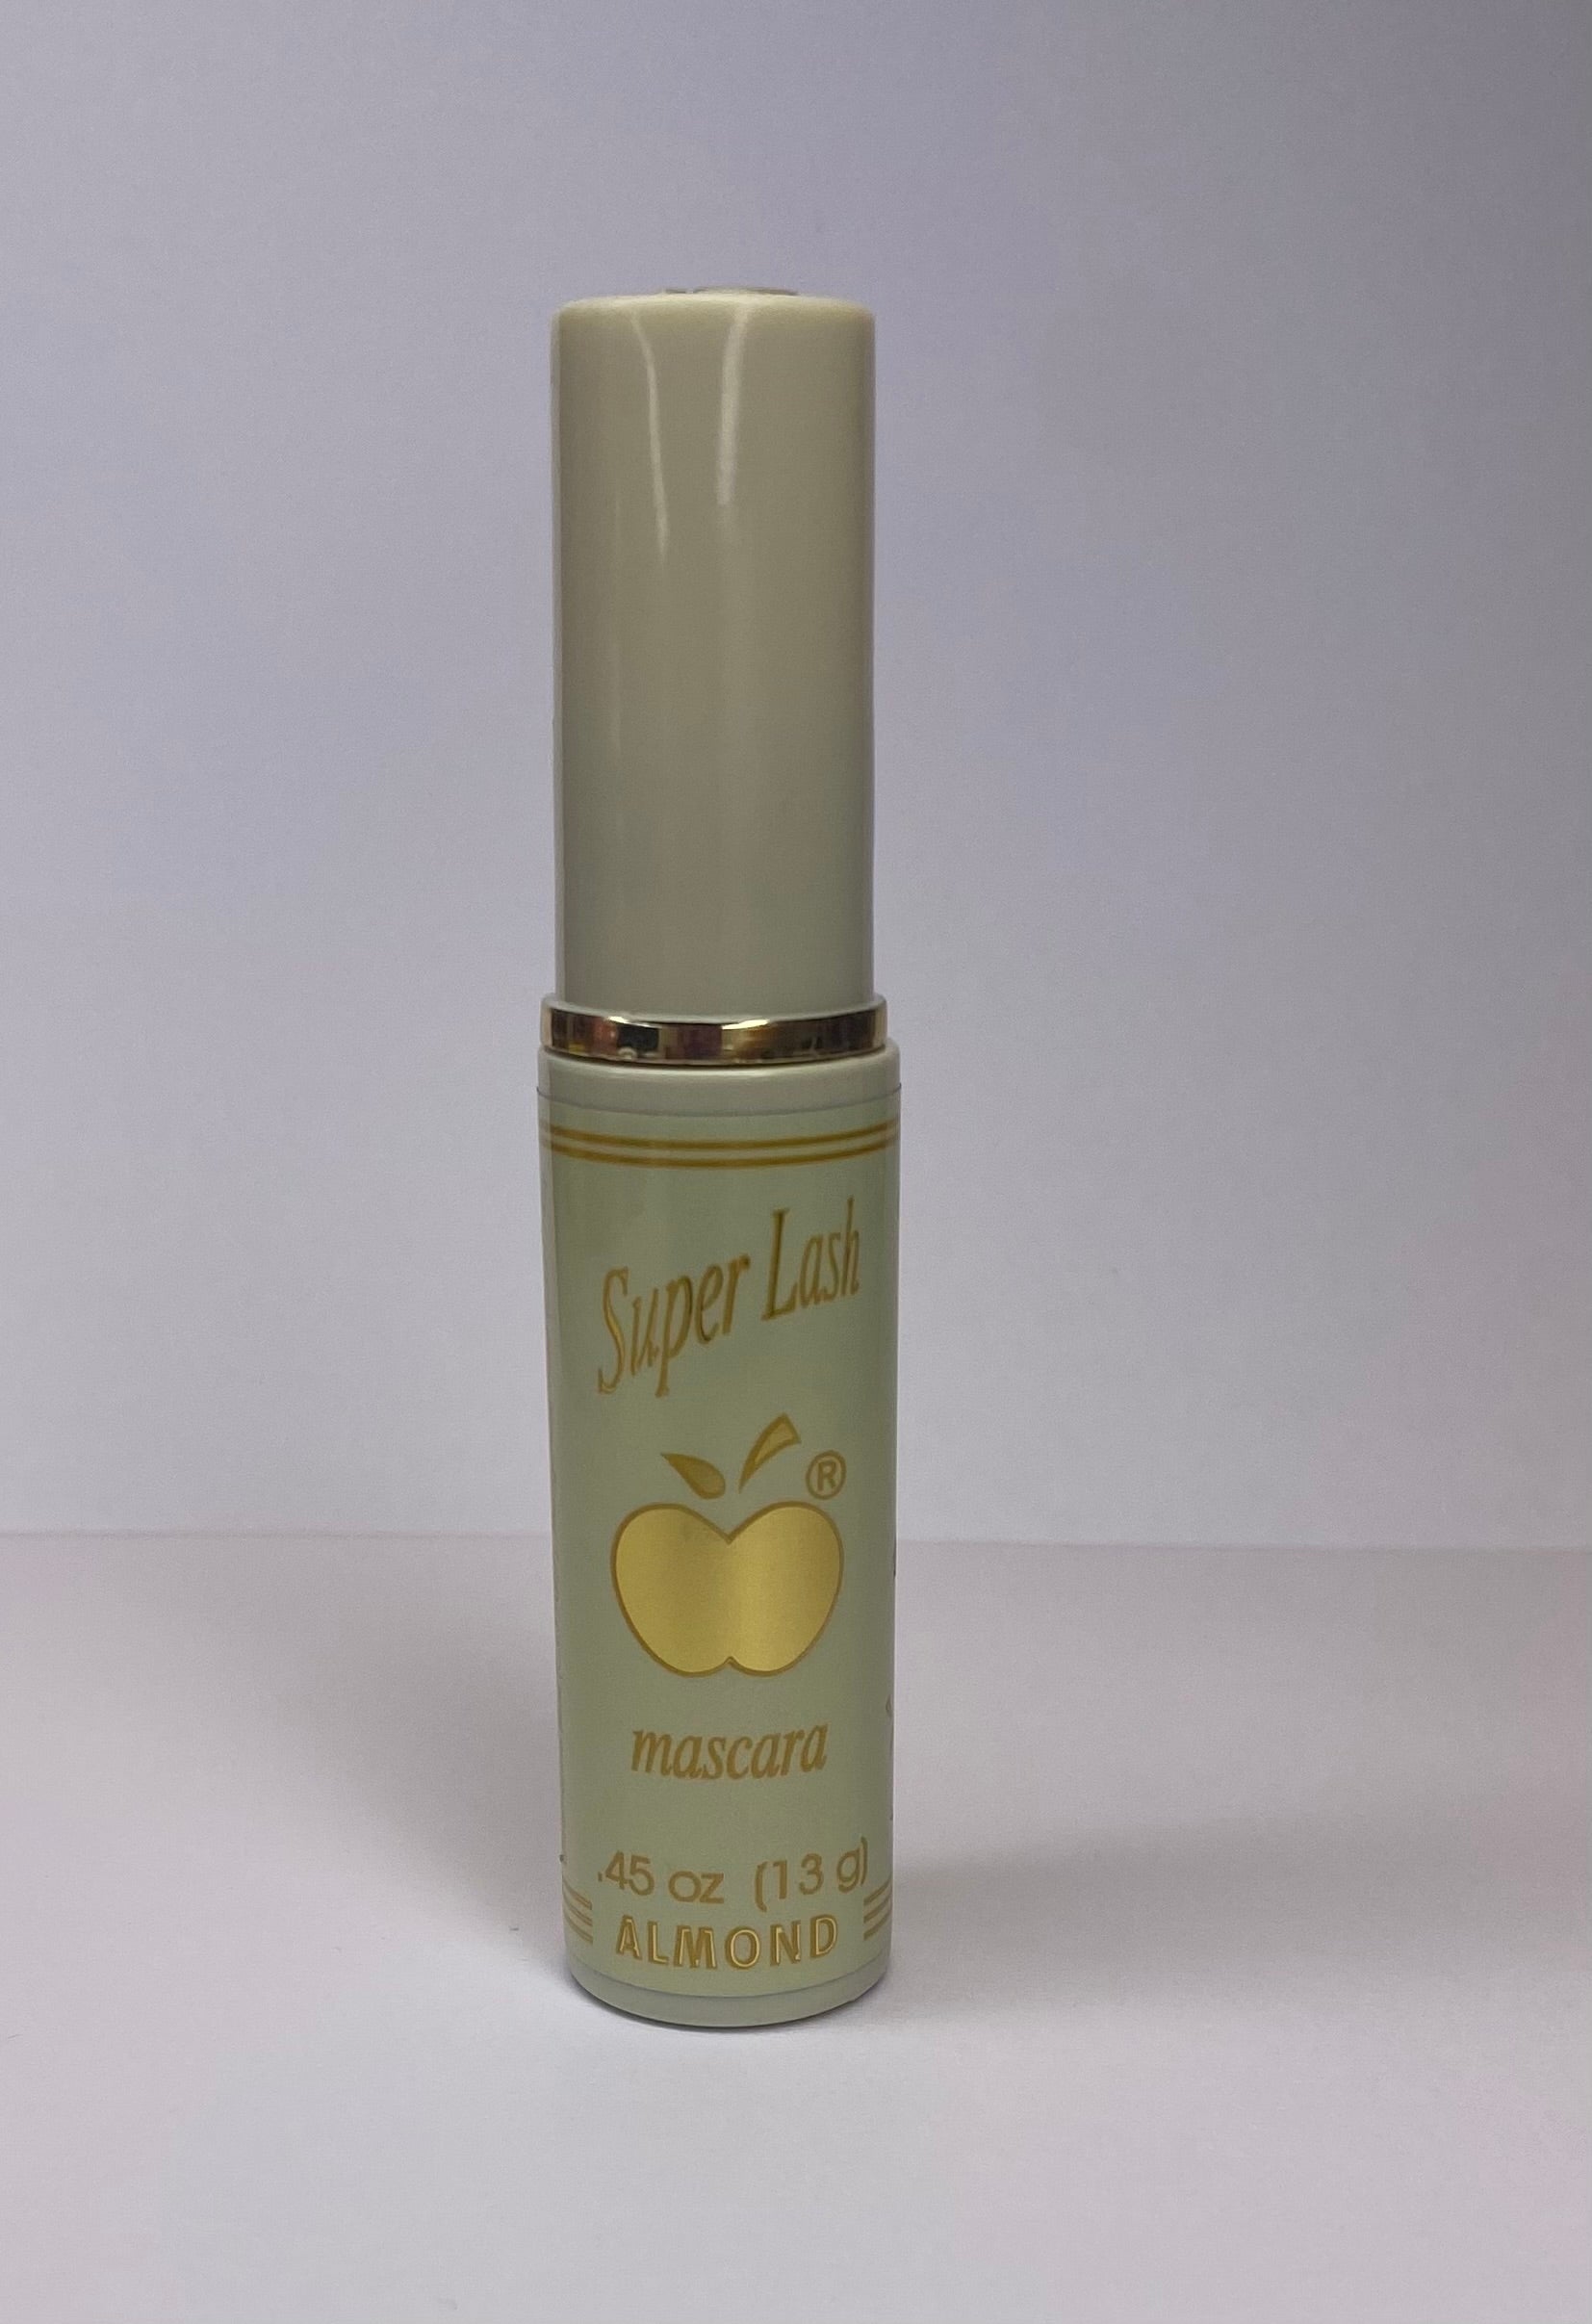 Almond Apple Mascara